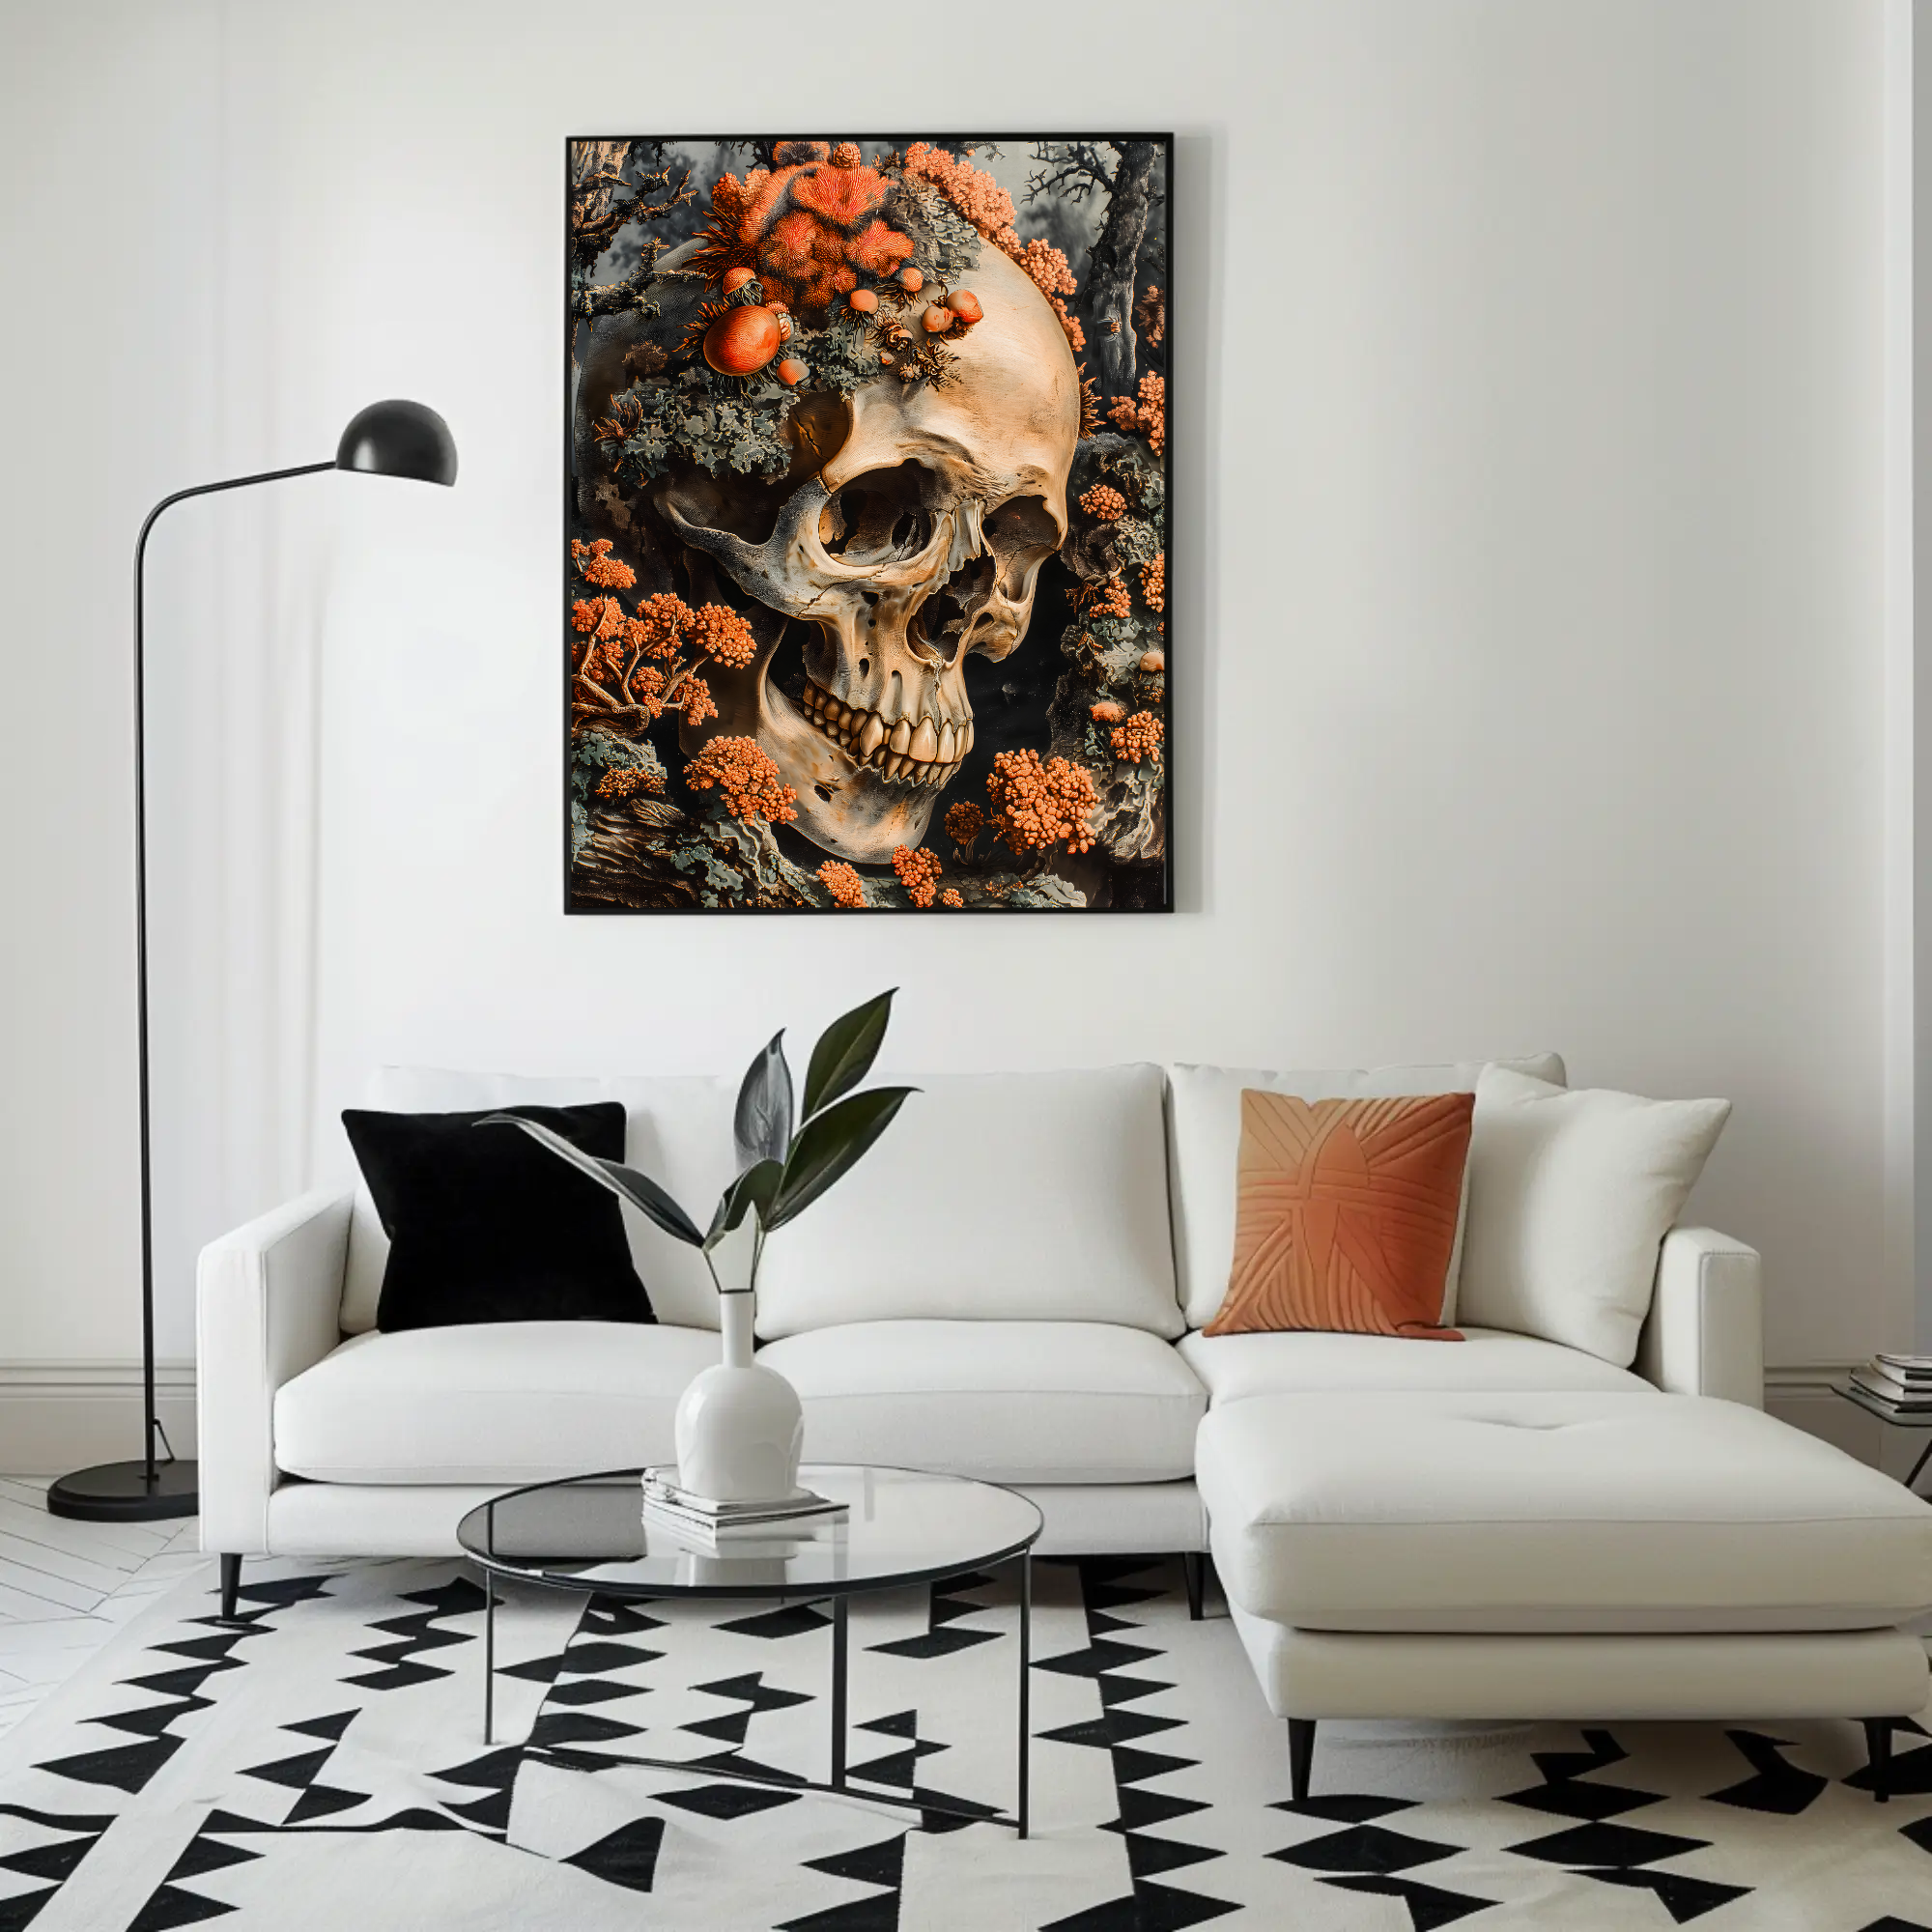 Cranial Bloom Wall Art: Memento Mori Skull